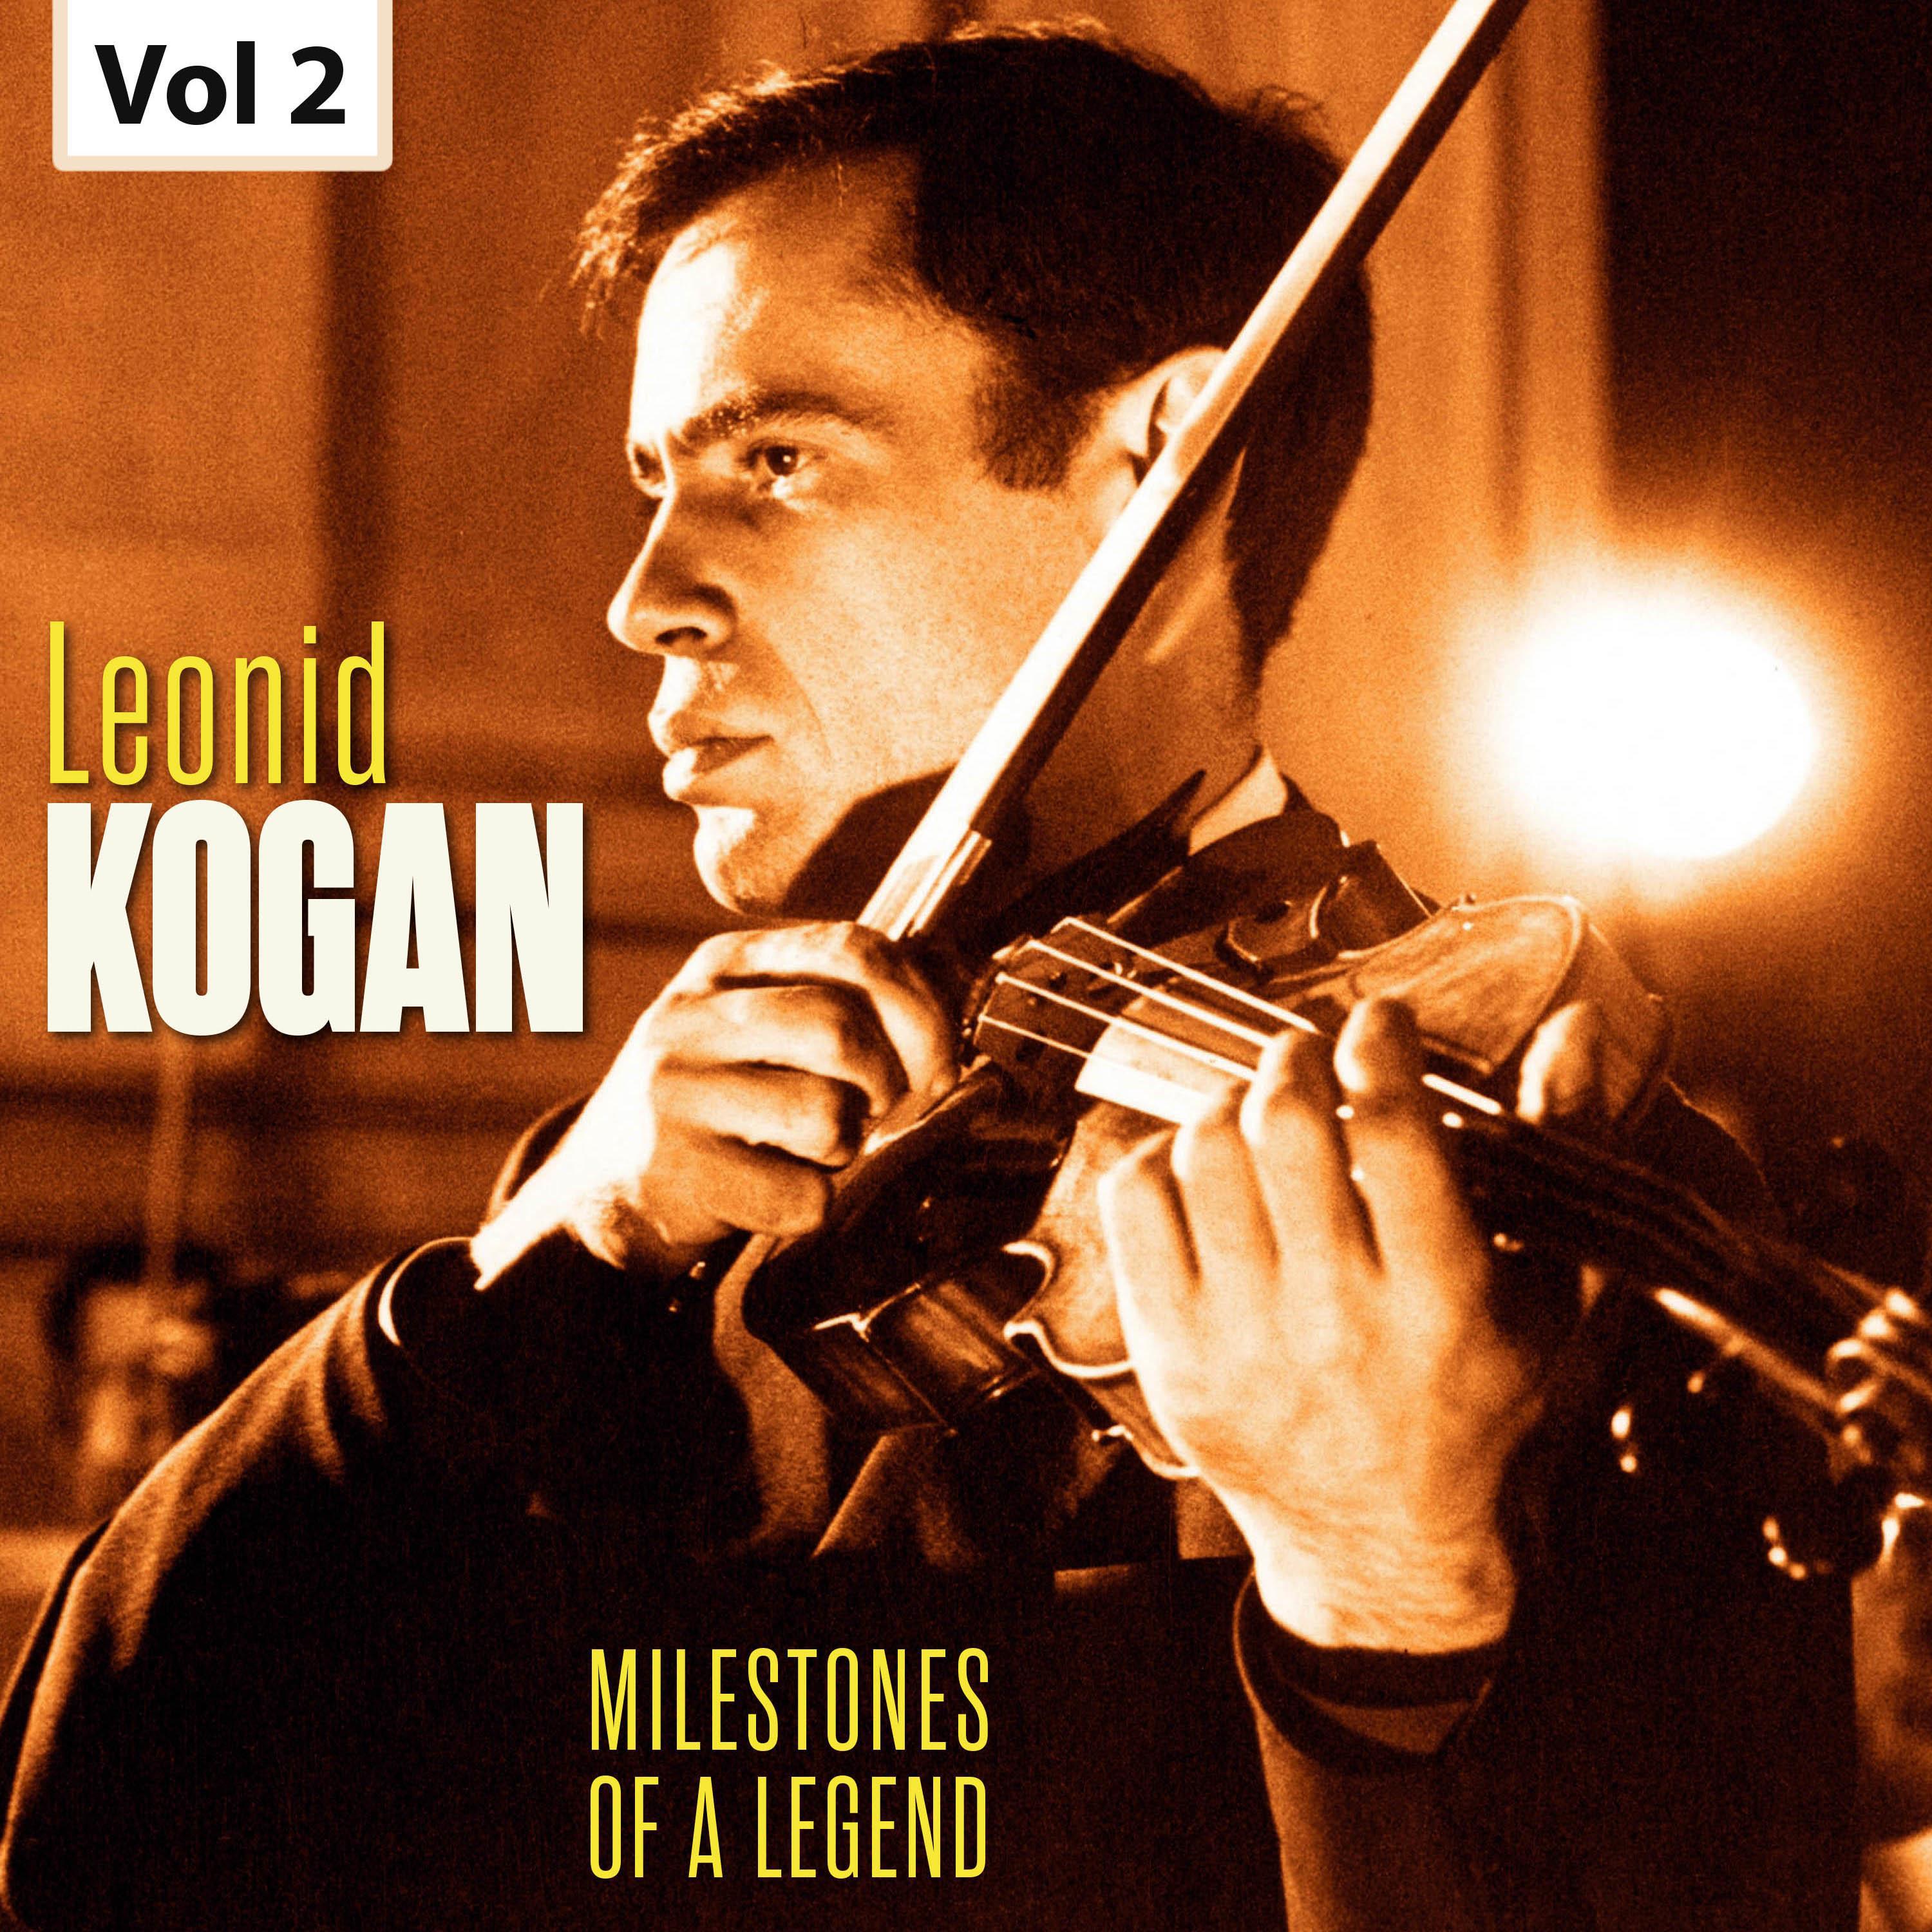 Milestones of a Legend - Leonid Kogan, Vol. 2